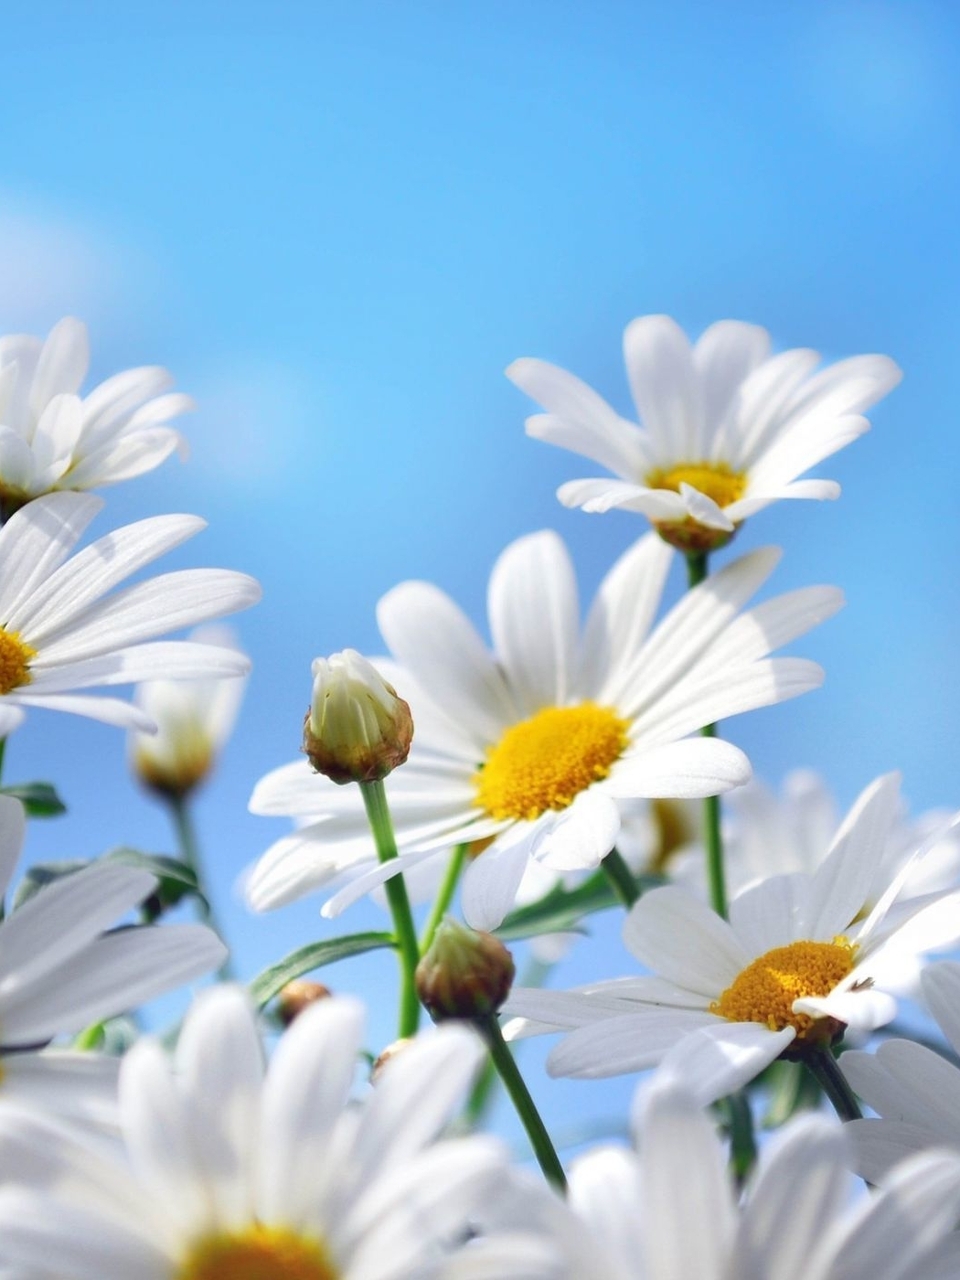 Image: Flowers, chamomile, petals, white